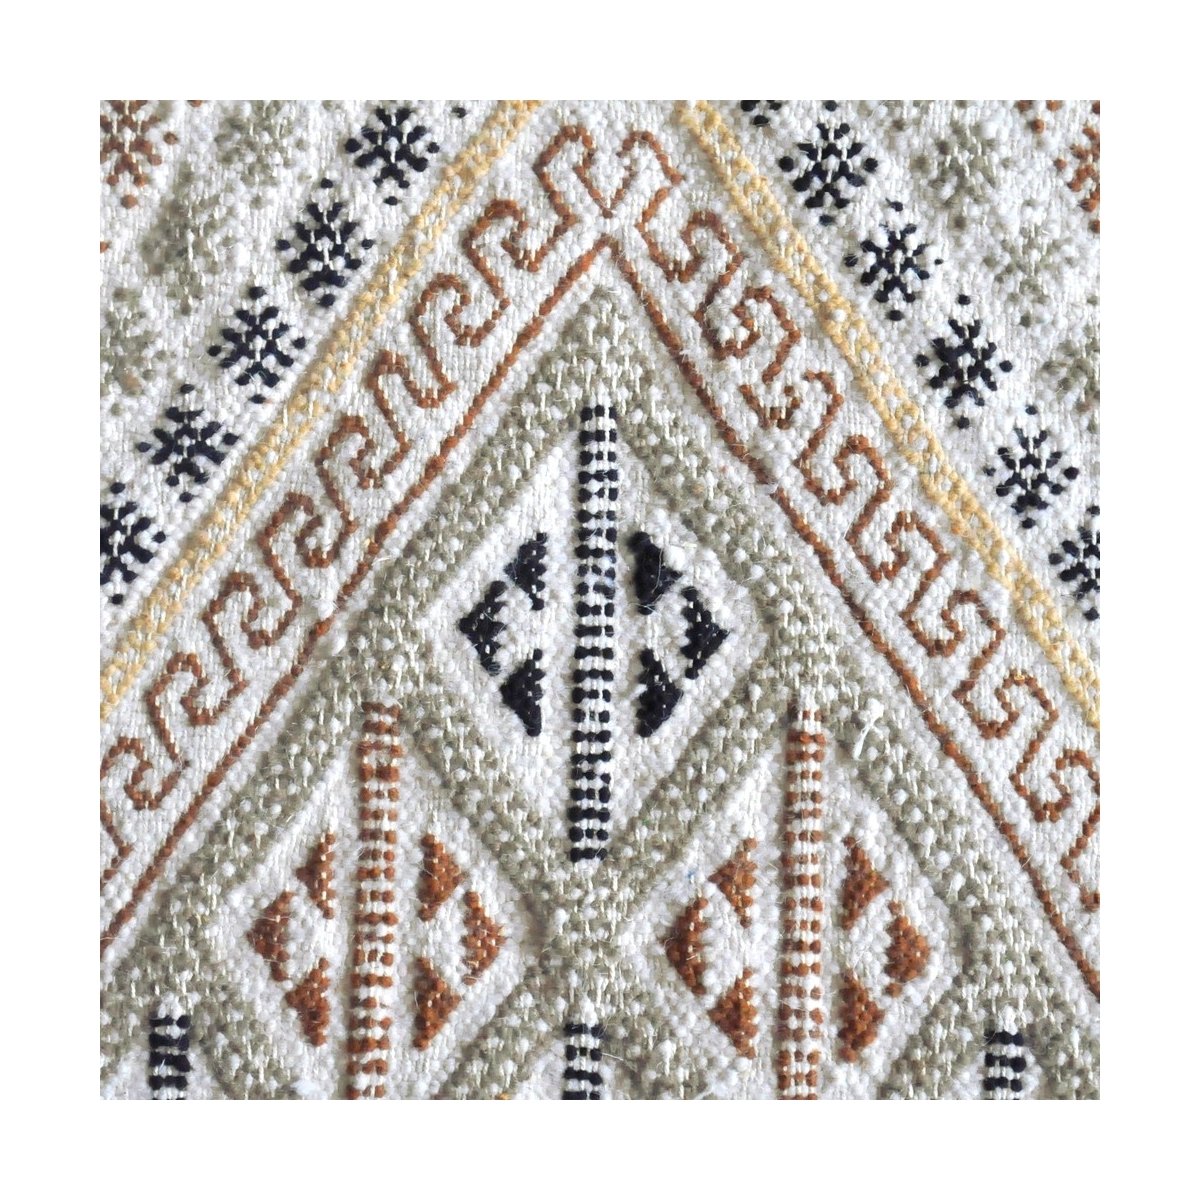 tappeto berbero Tappeto Margoum Khaznadar 115x195 Bianca (Fatto a mano, Lana, Tunisia) Tappeto margoum tunisino della città di K